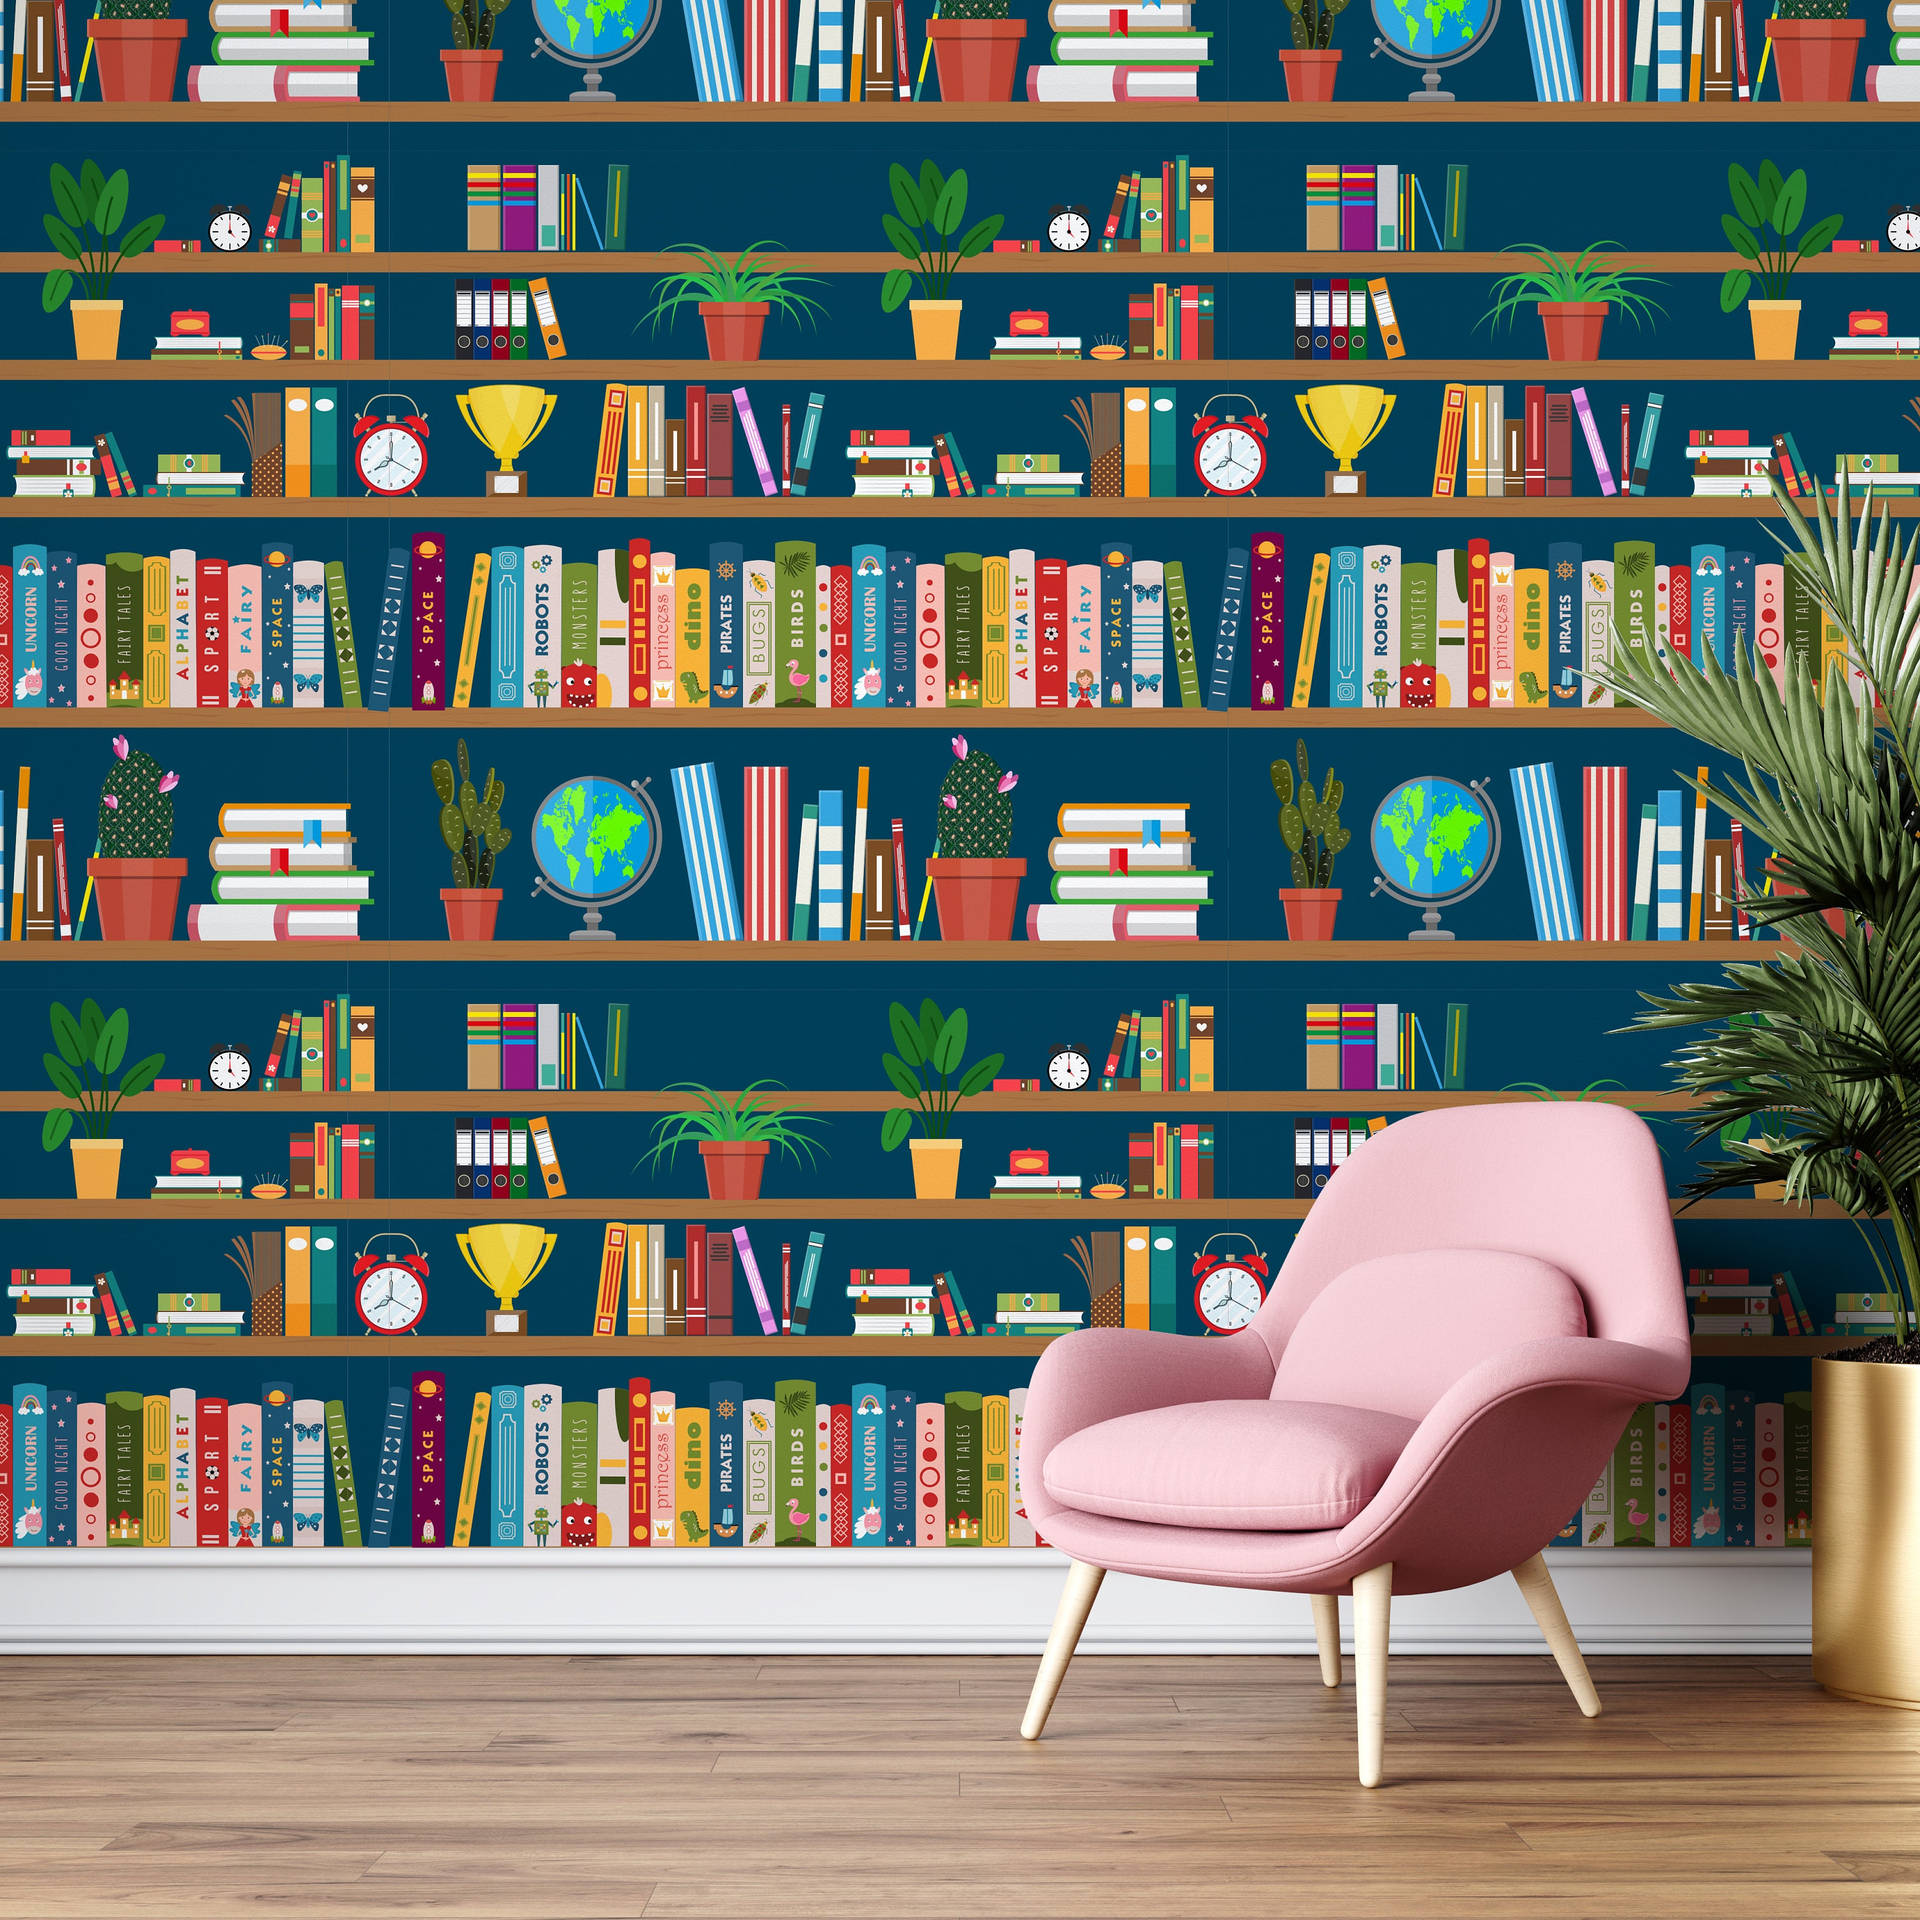 Room Painted Bookshelf Wallpaper Wallpaper